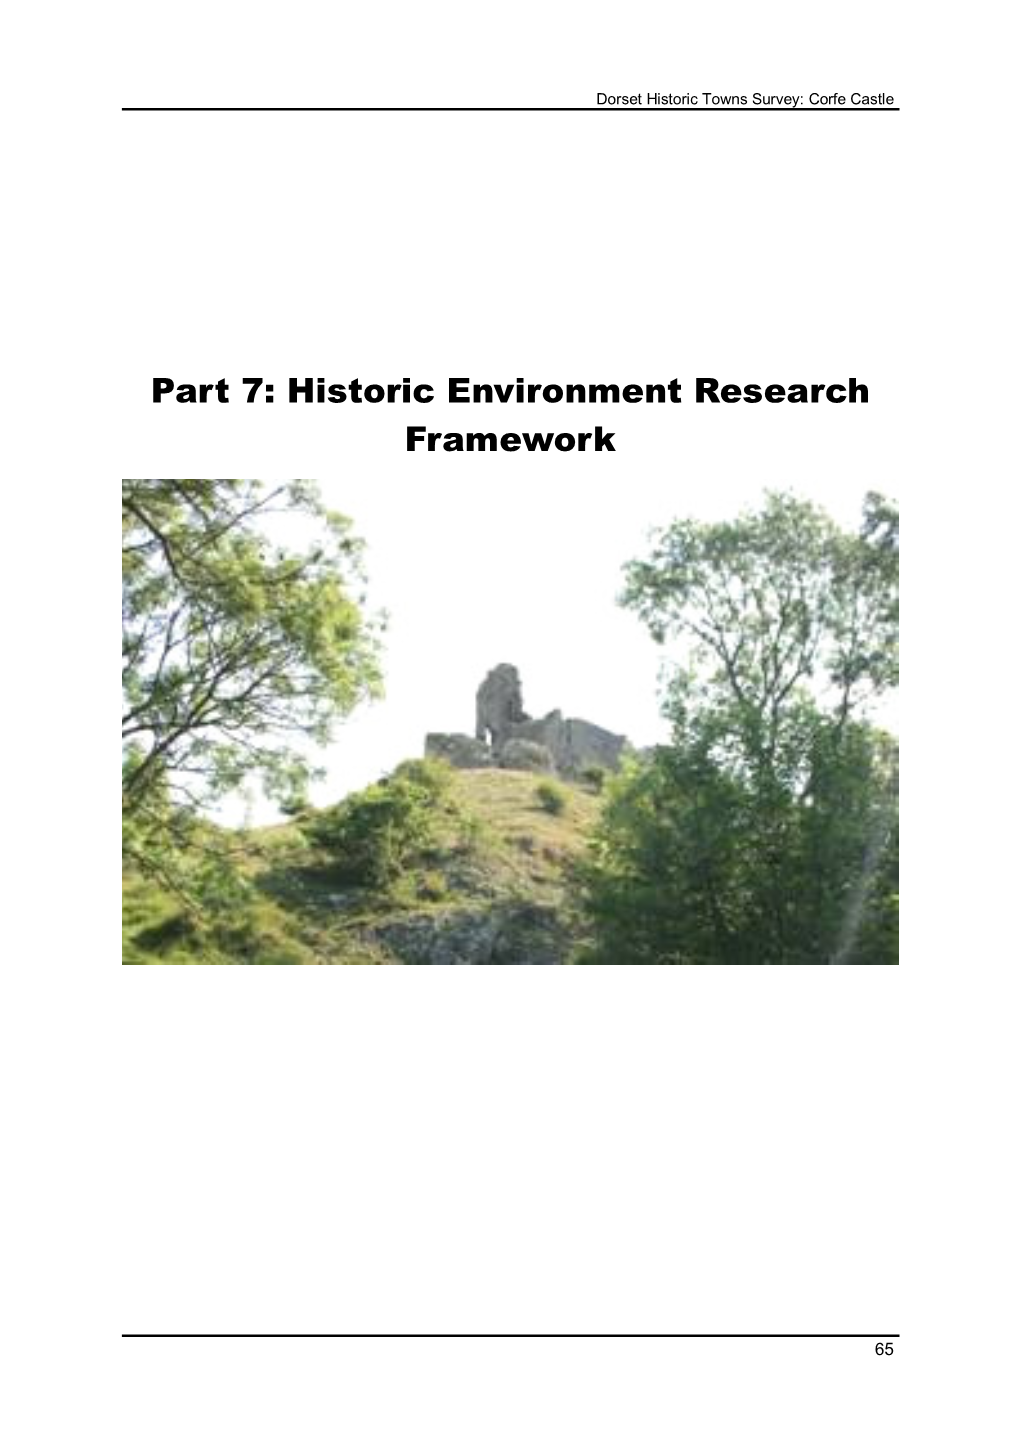 Part 7: Historic Environment Research Framework